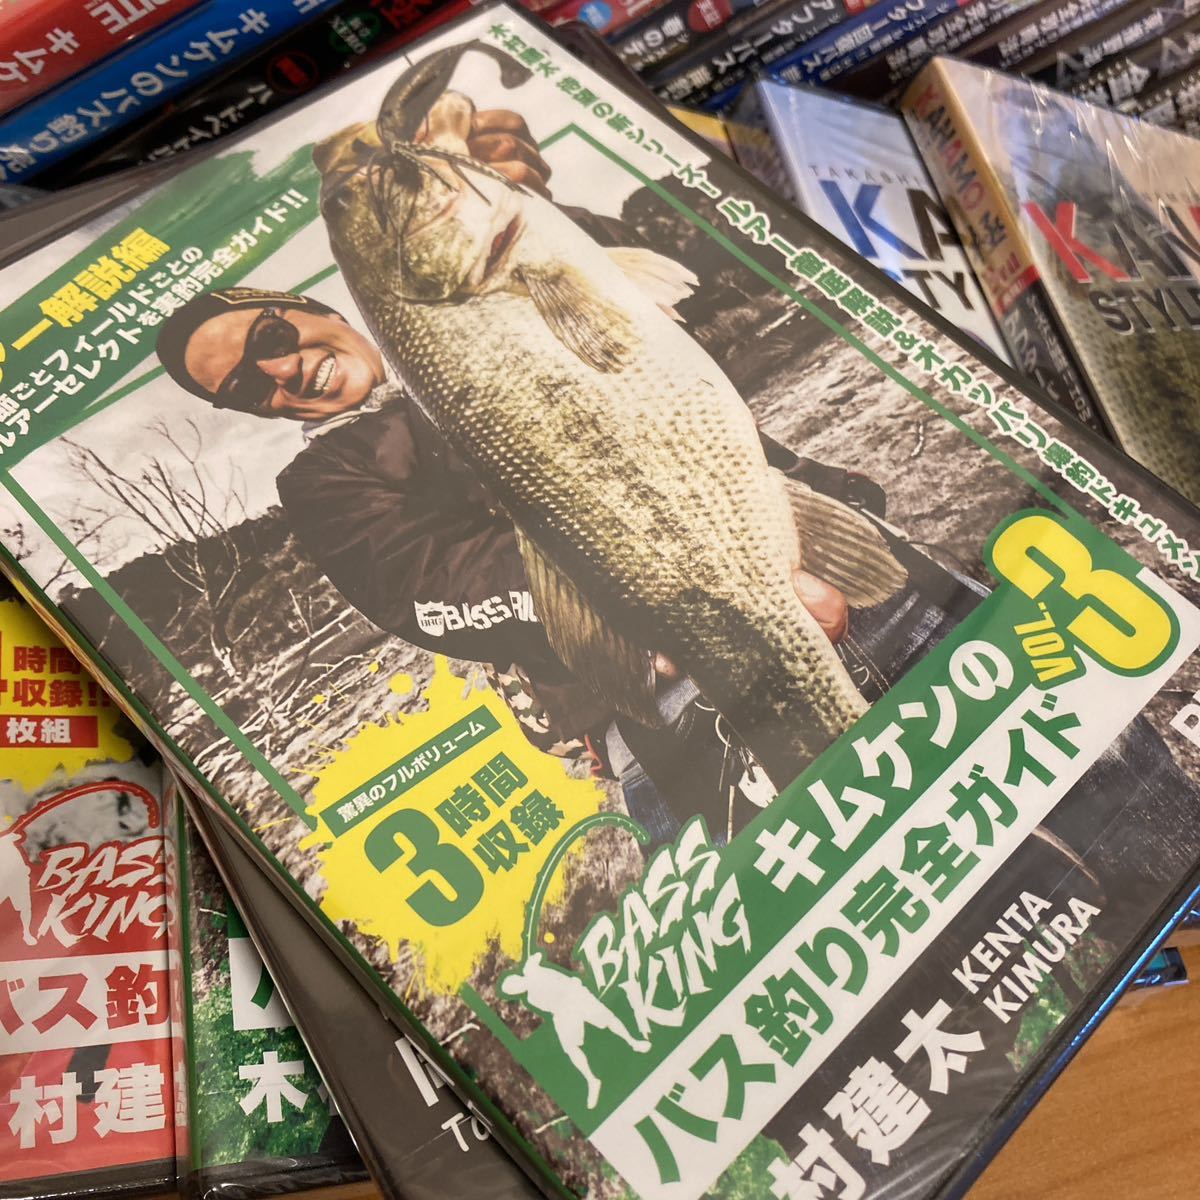  kana mo style Kim ticket. bus fishing complete guide Raid Japan gold forest .. tree .. futoshi DVD